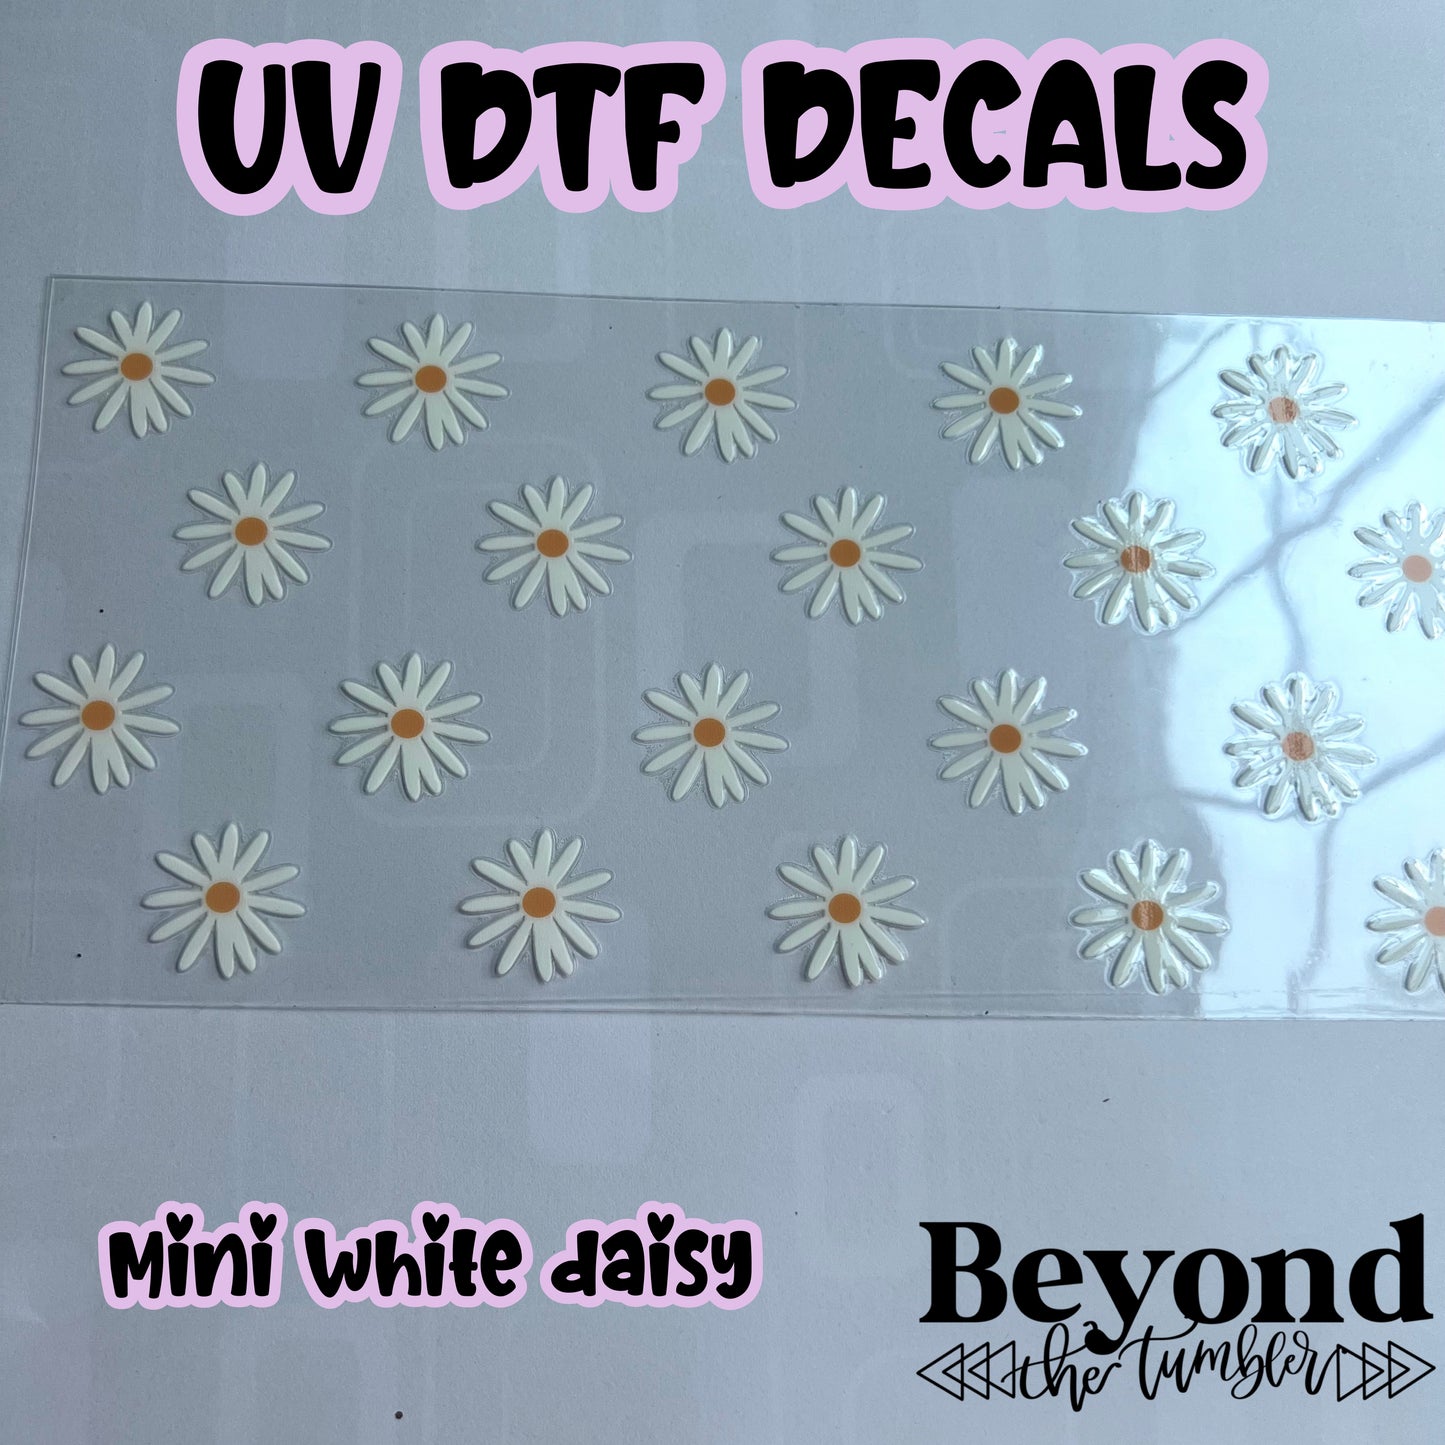 Mini white daisy UVDTF Decals